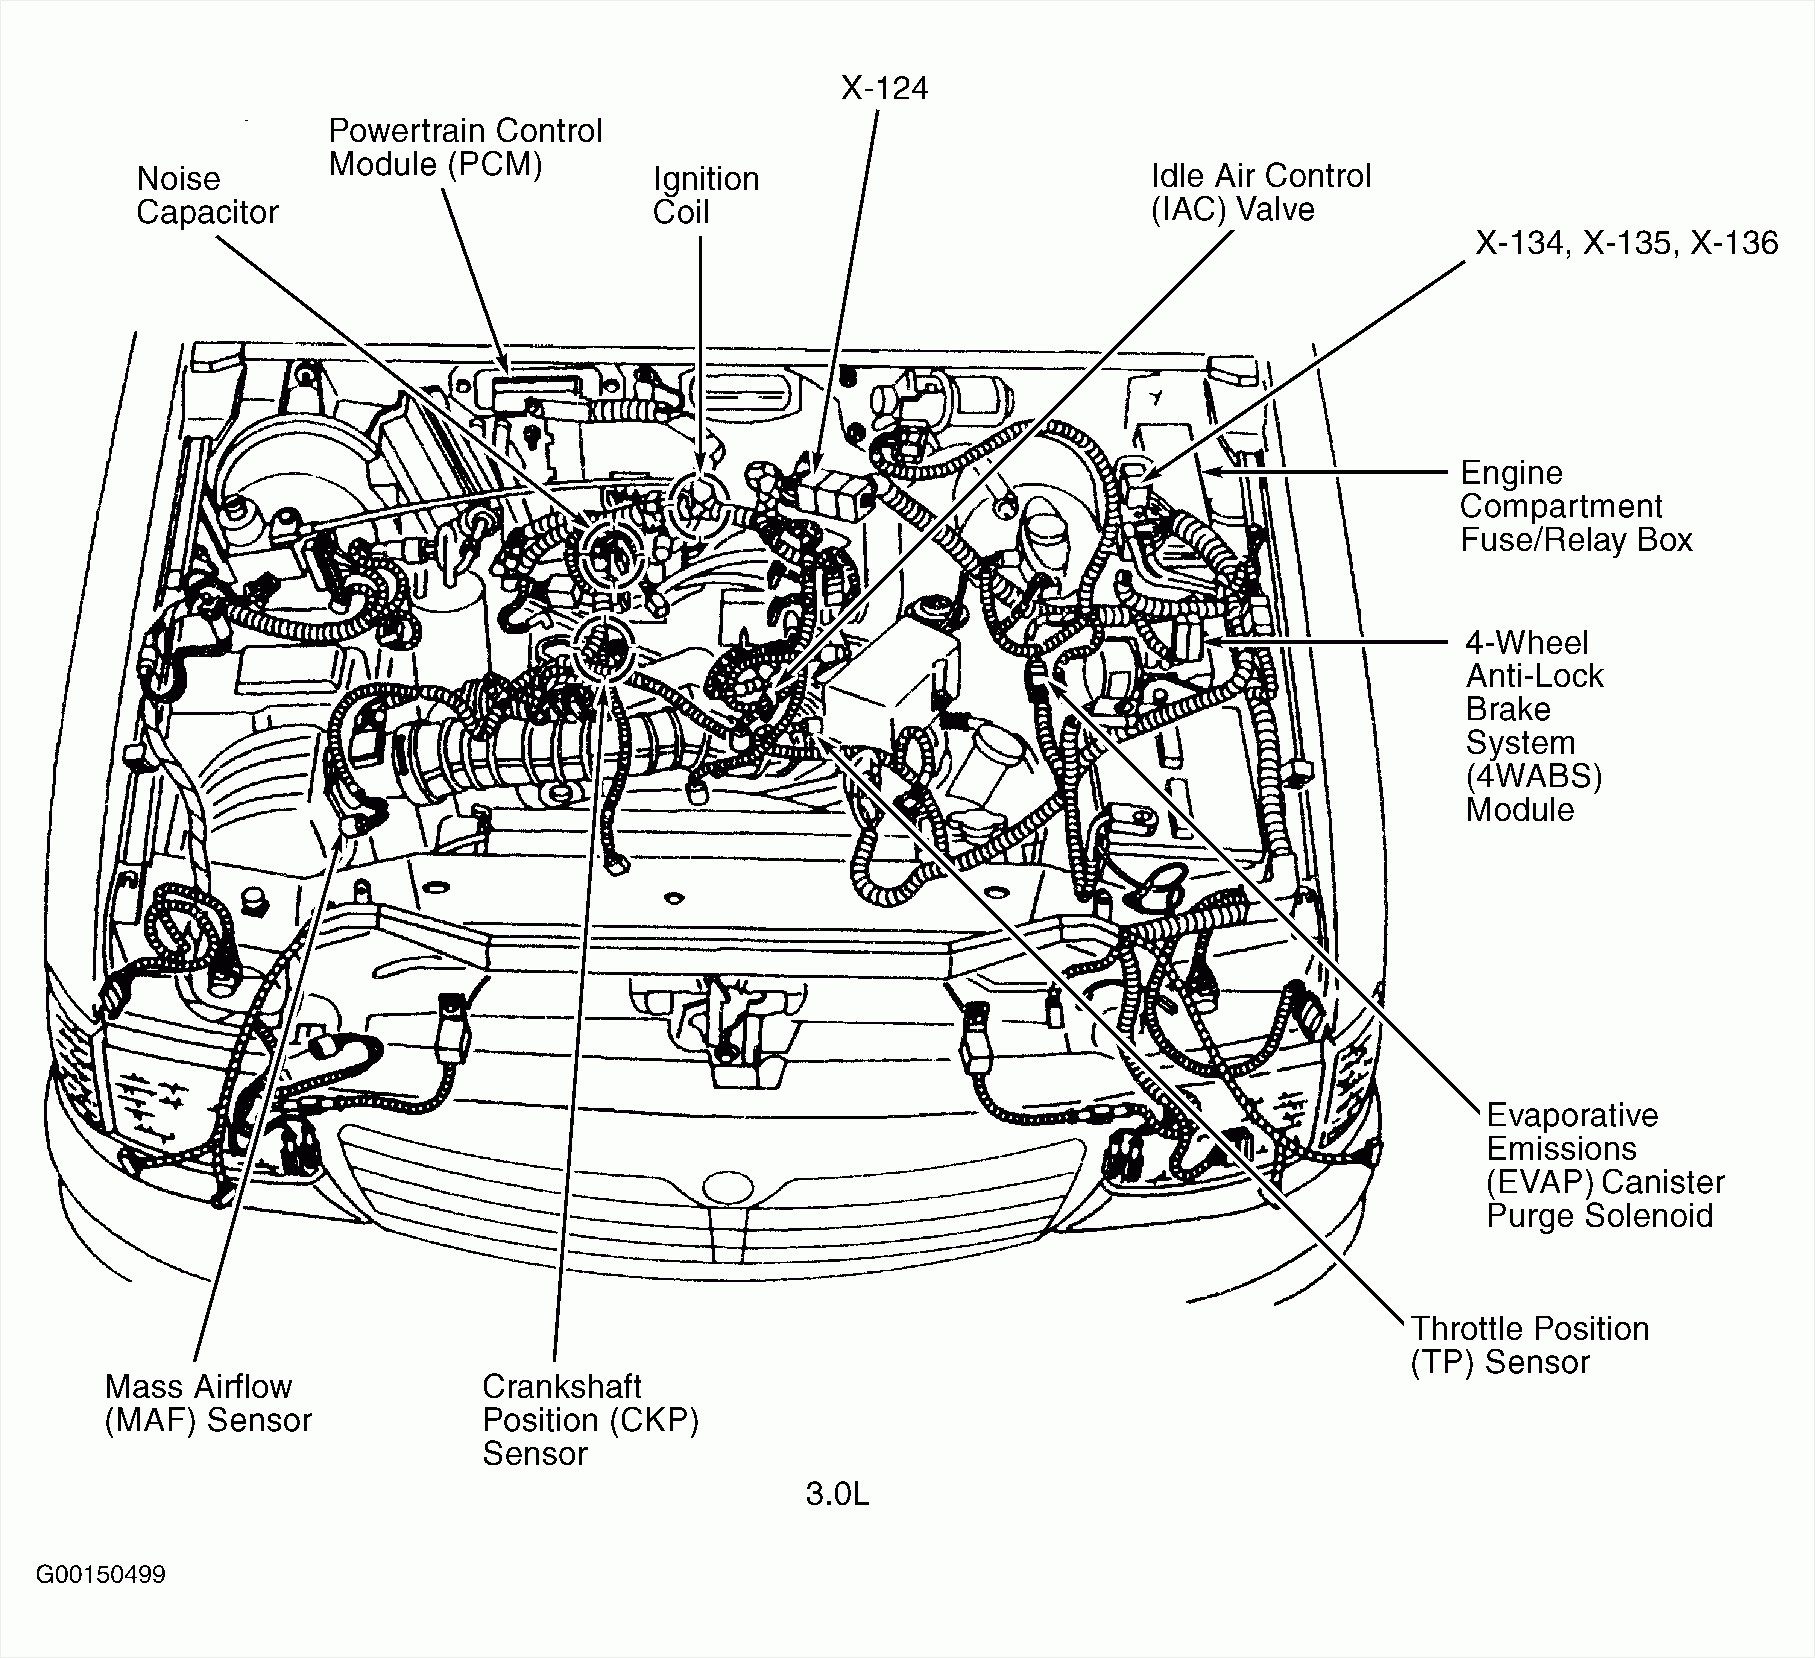 Ford Focus Engine Parts Diagram Mazda Engine Schematics Wiring Diagram Database Of Ford Focus Engine Parts Diagram